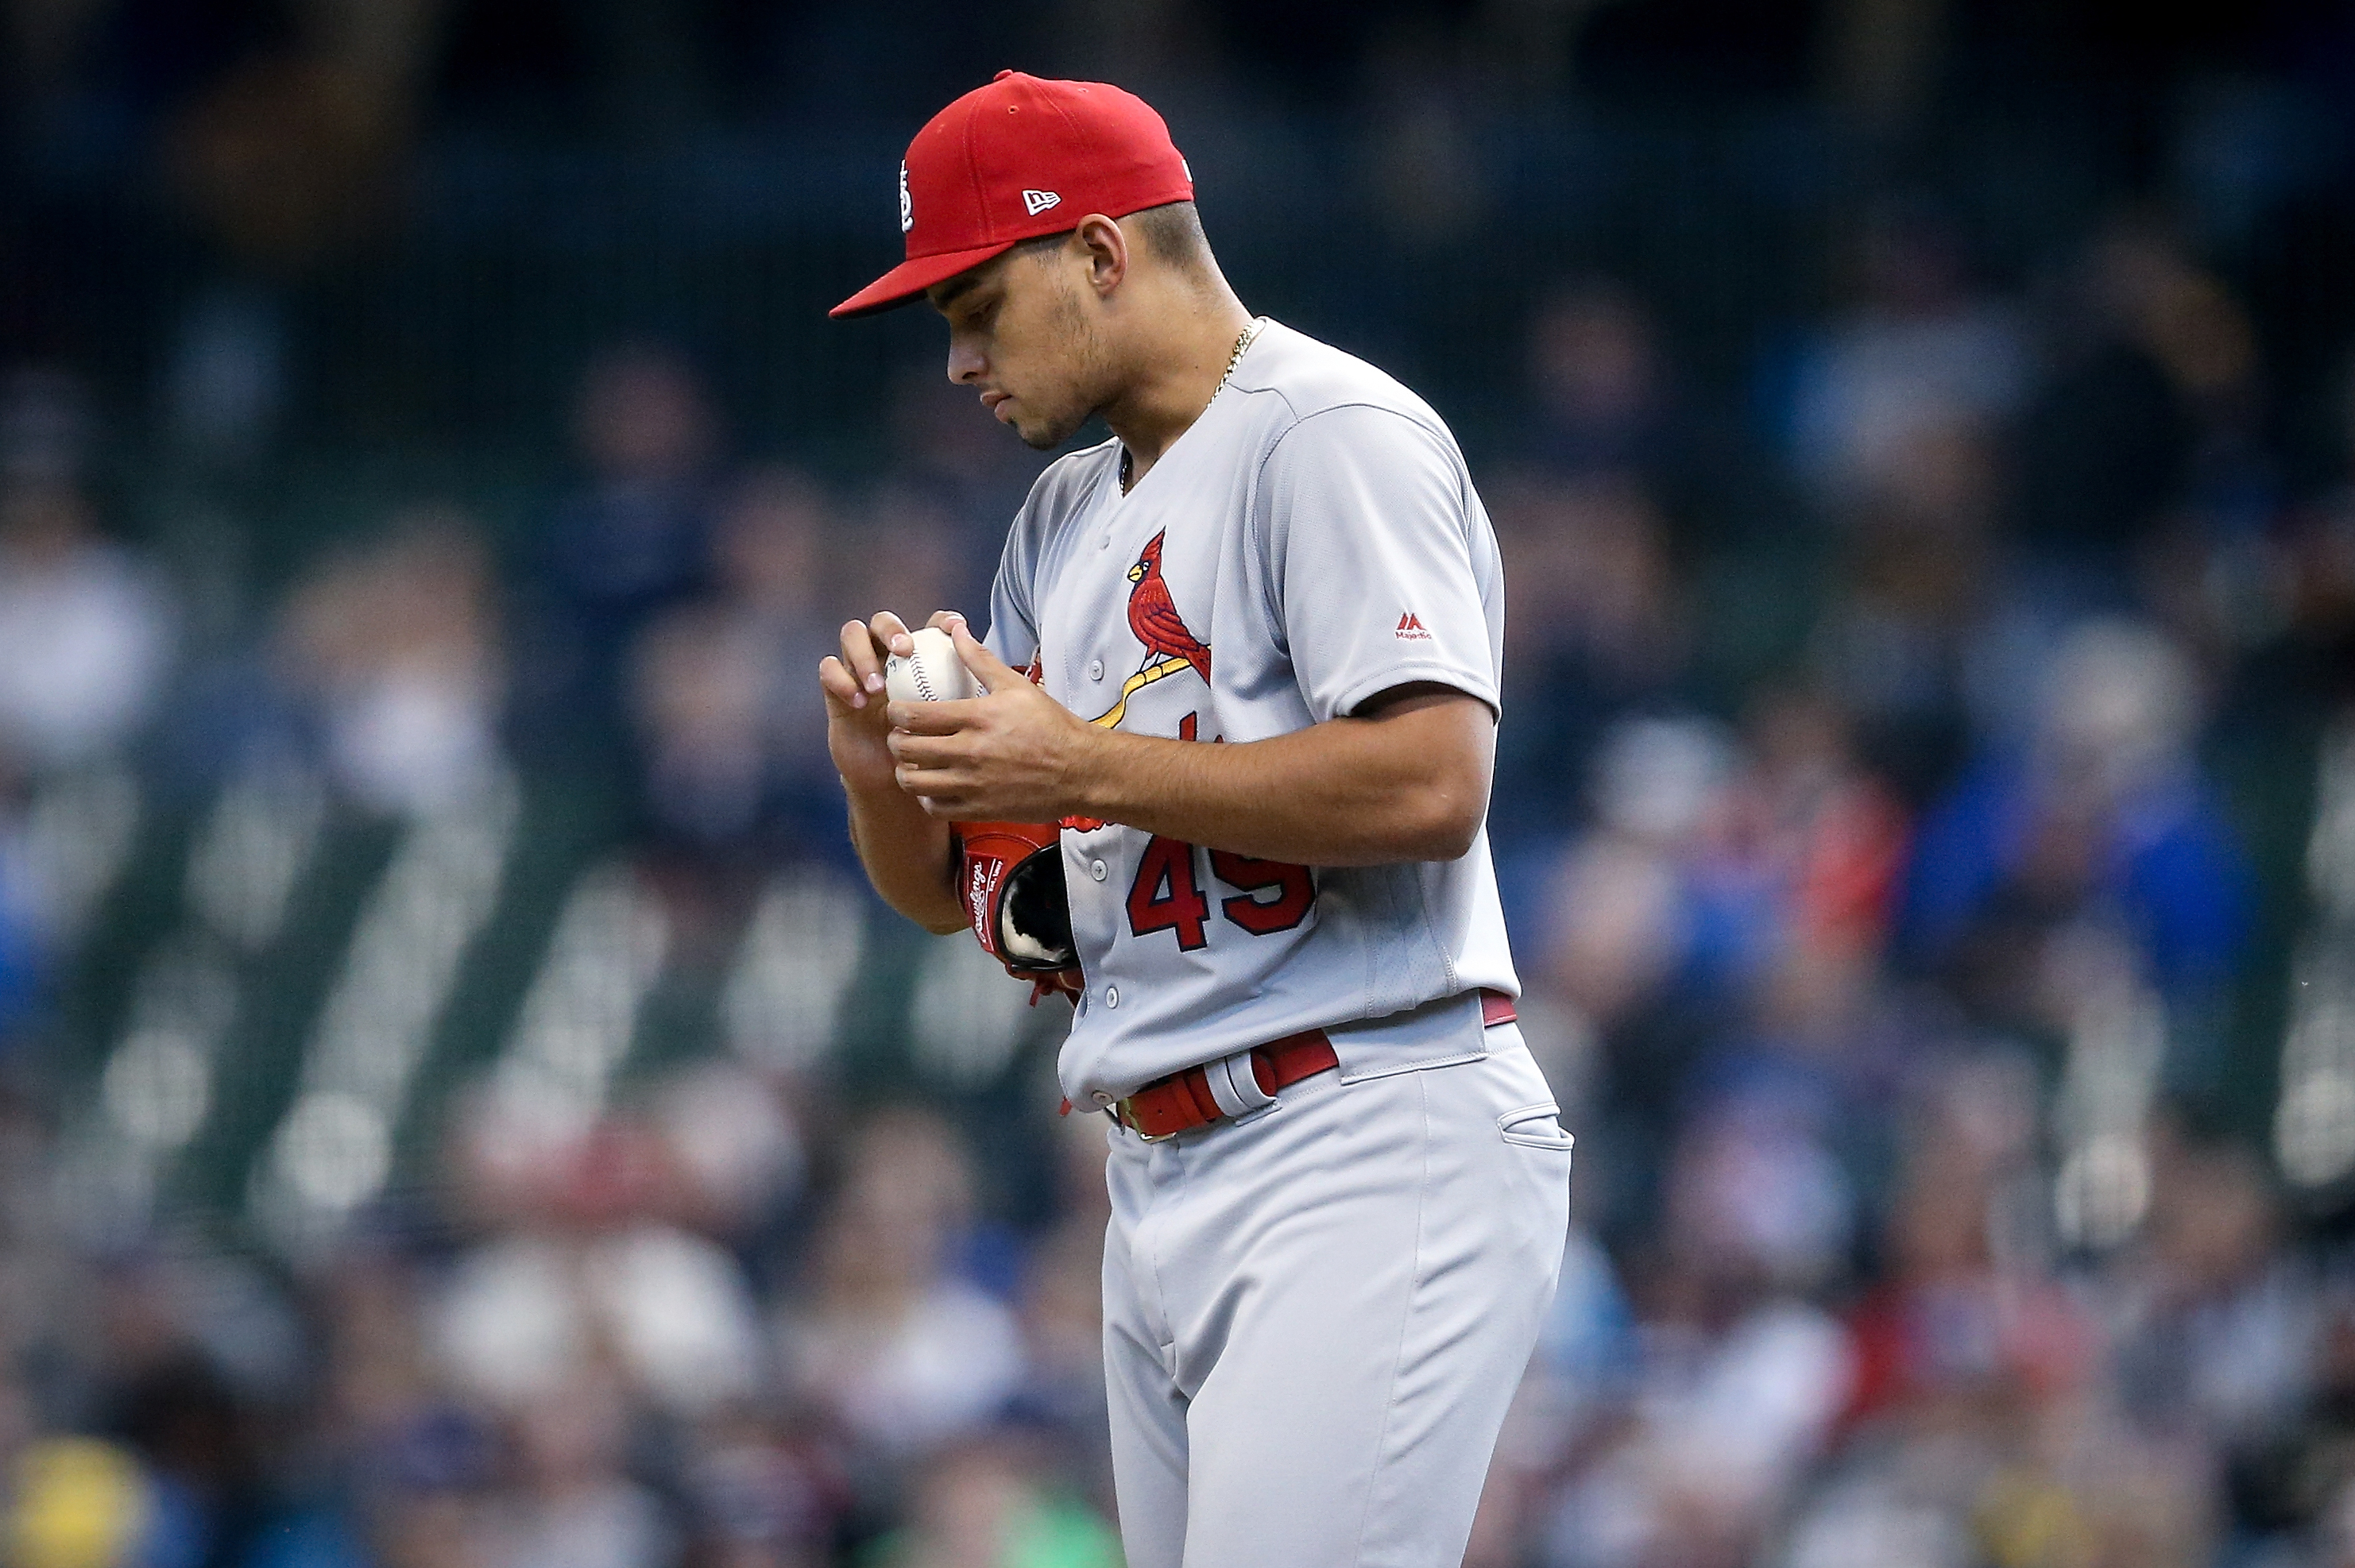 Cardinals' Jordan Hicks Opts out of 2020 MLB Season, Cites Health